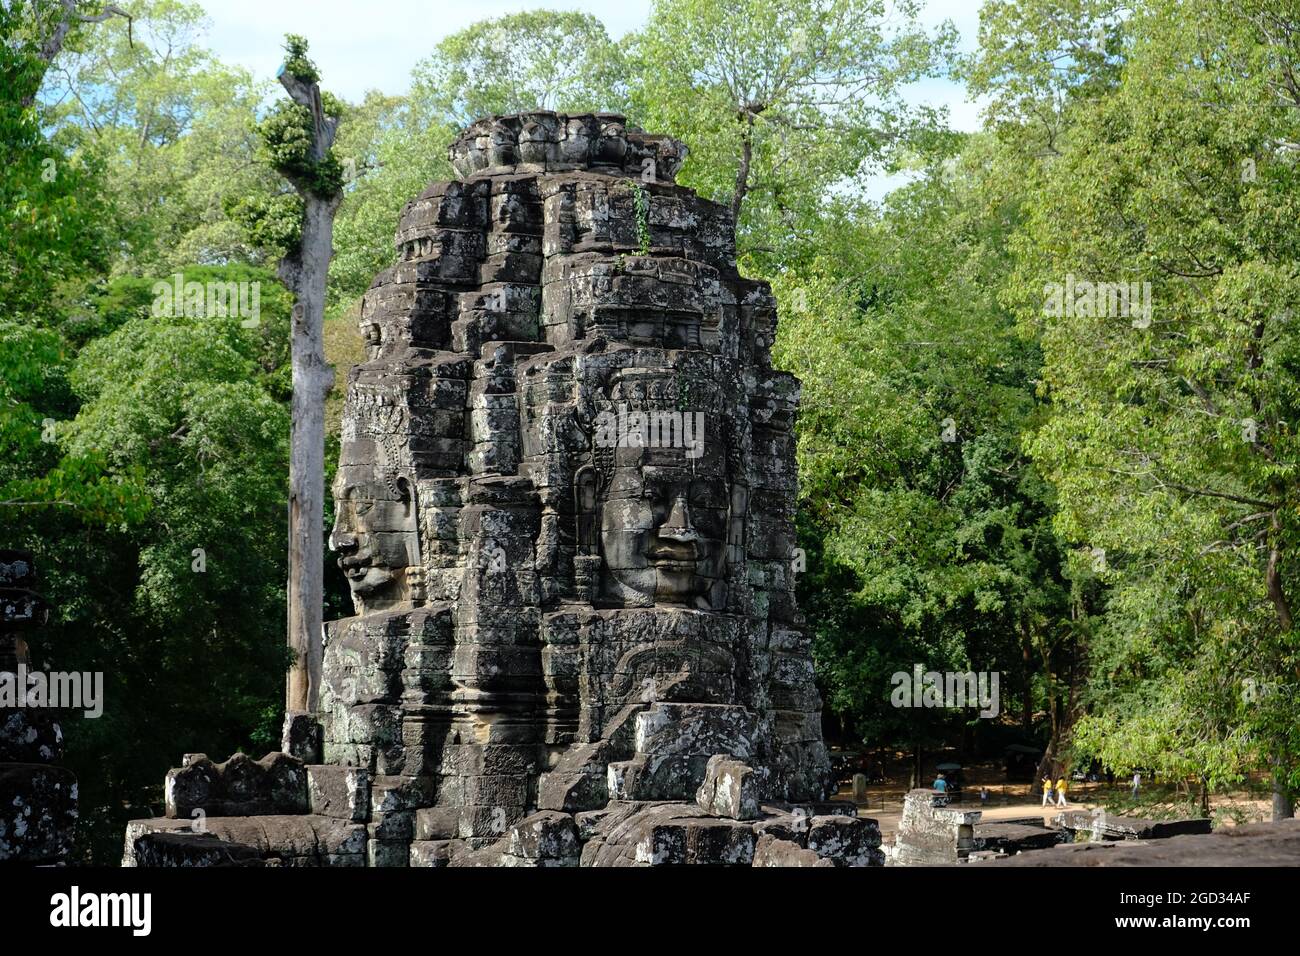 Kambodscha Krong Siem Reap Angkor Wat - Bayon Tempel Gesichter in Steinmauern geschnitzt Stockfoto